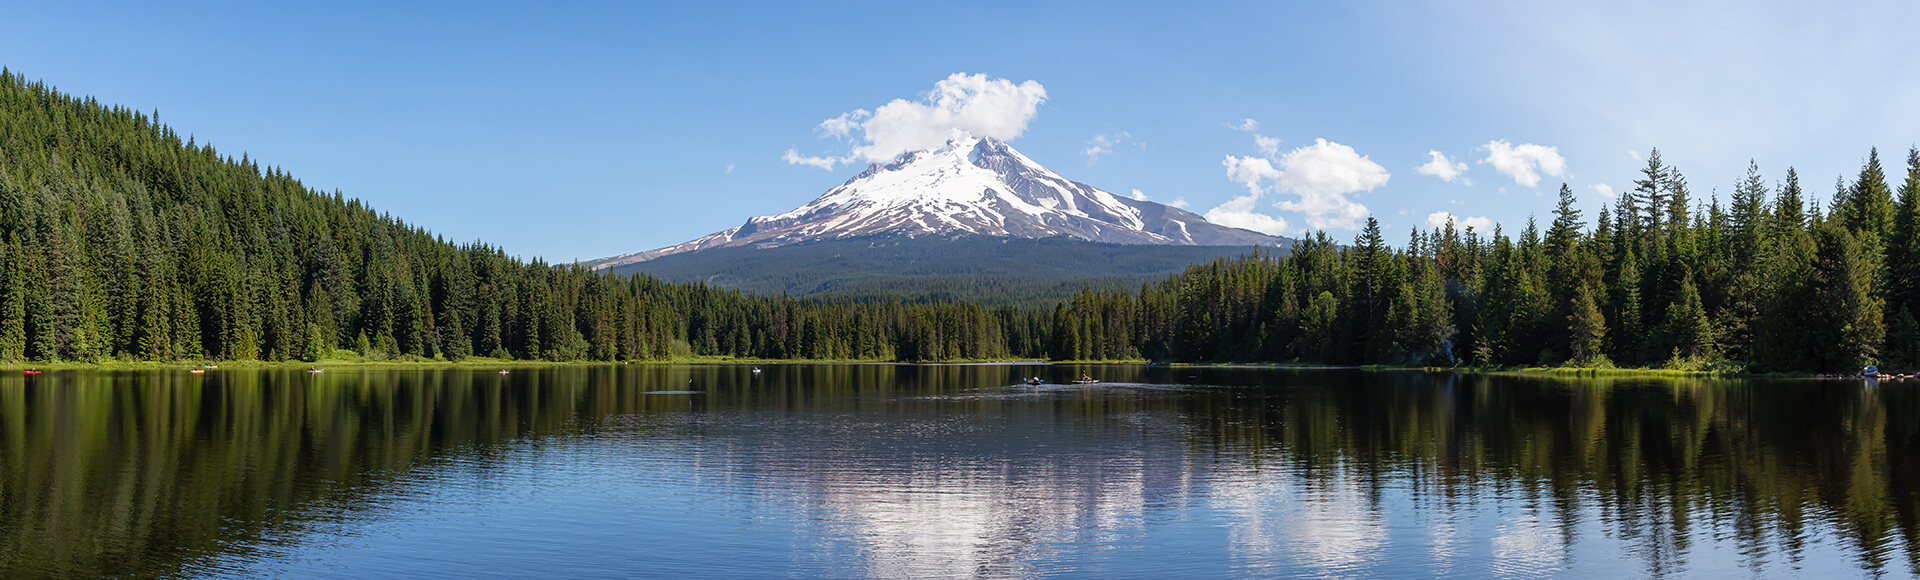 Nature shot of Oregon with Mount Hood